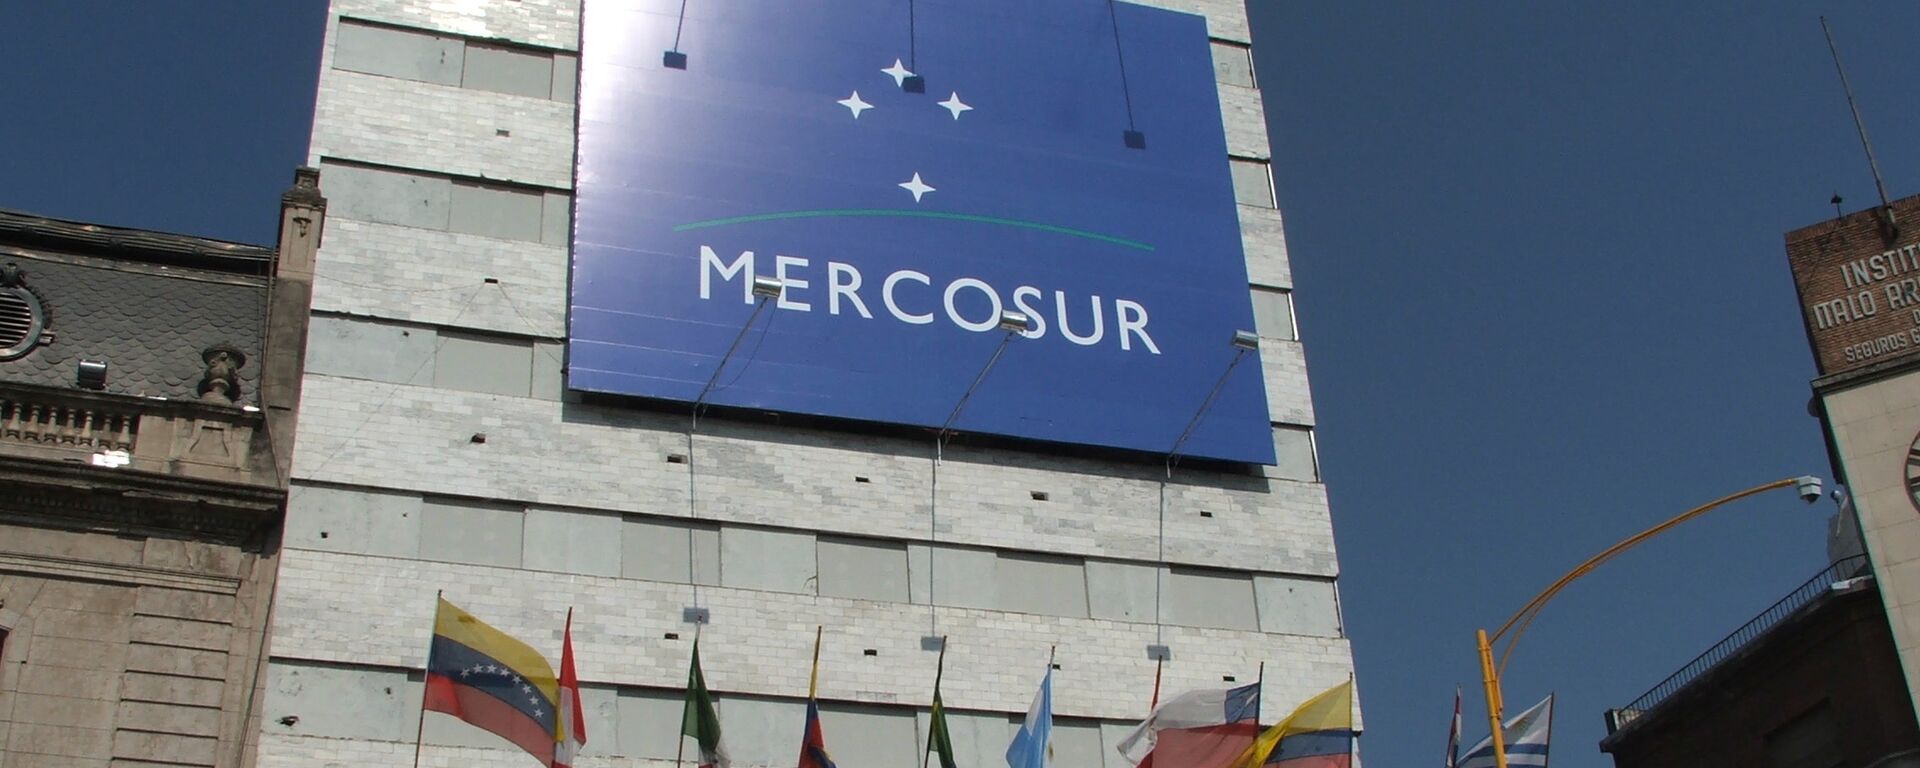 Sede del Mercosur - Sputnik Mundo, 1920, 12.03.2021